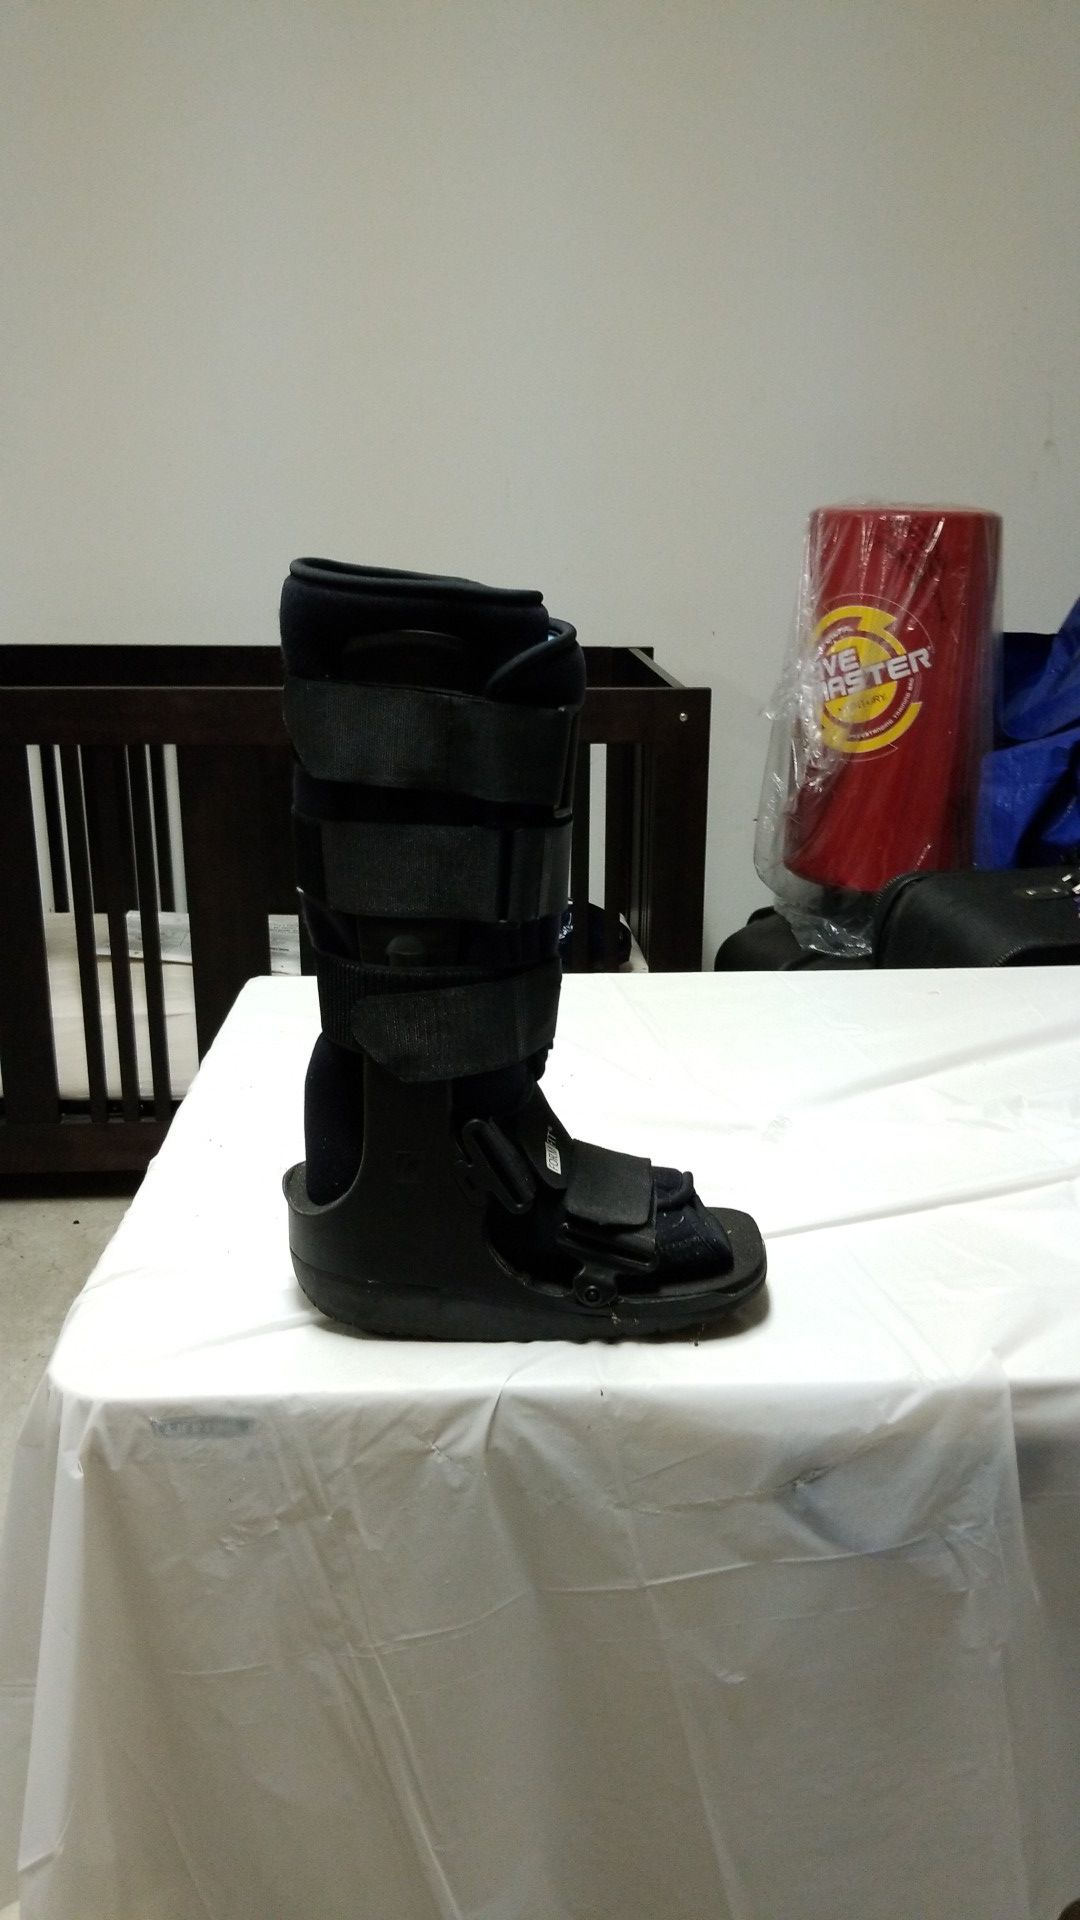 Formfit boot for leg injury